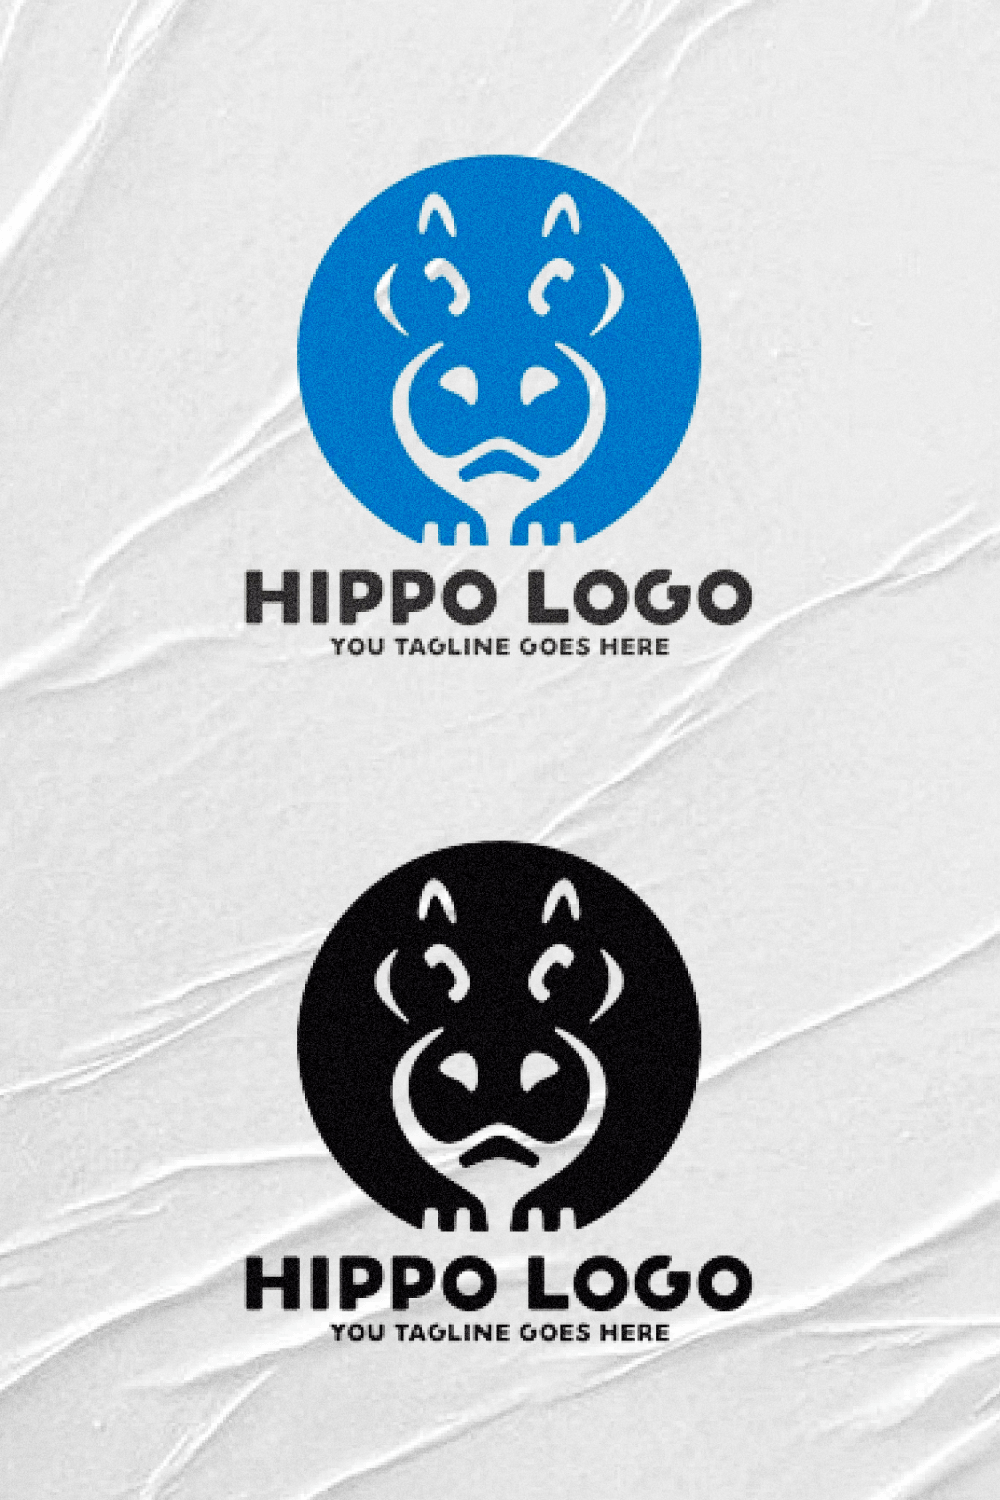 Hippo logo on blue background.